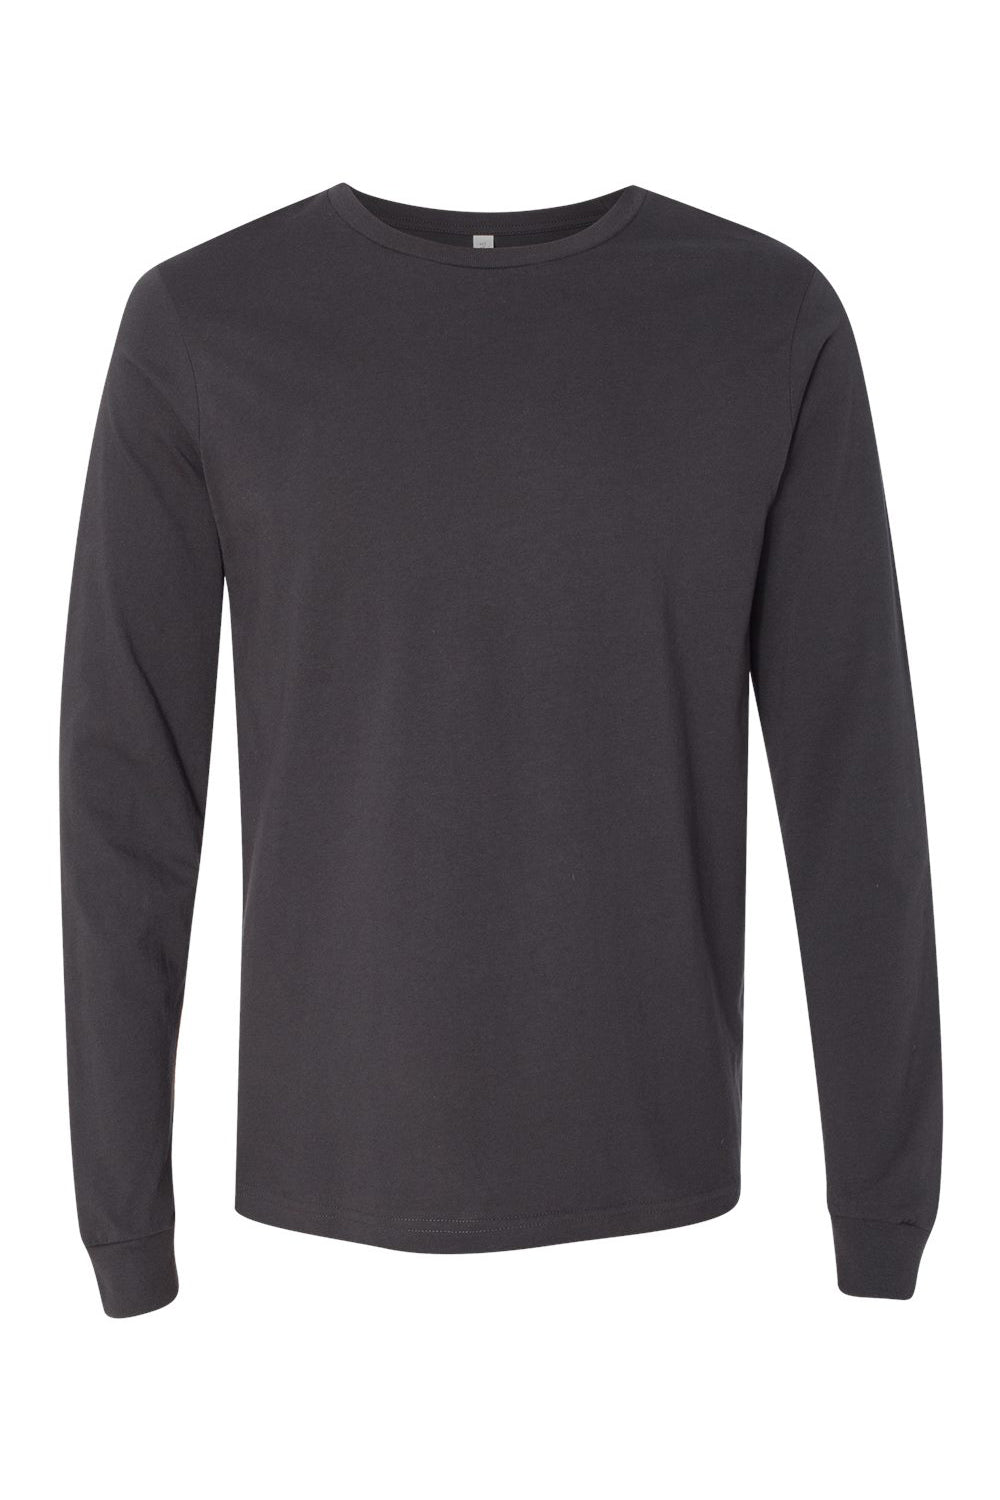 Bella + Canvas BC3501/3501 Mens Jersey Long Sleeve Crewneck T-Shirt Dark Grey Flat Front